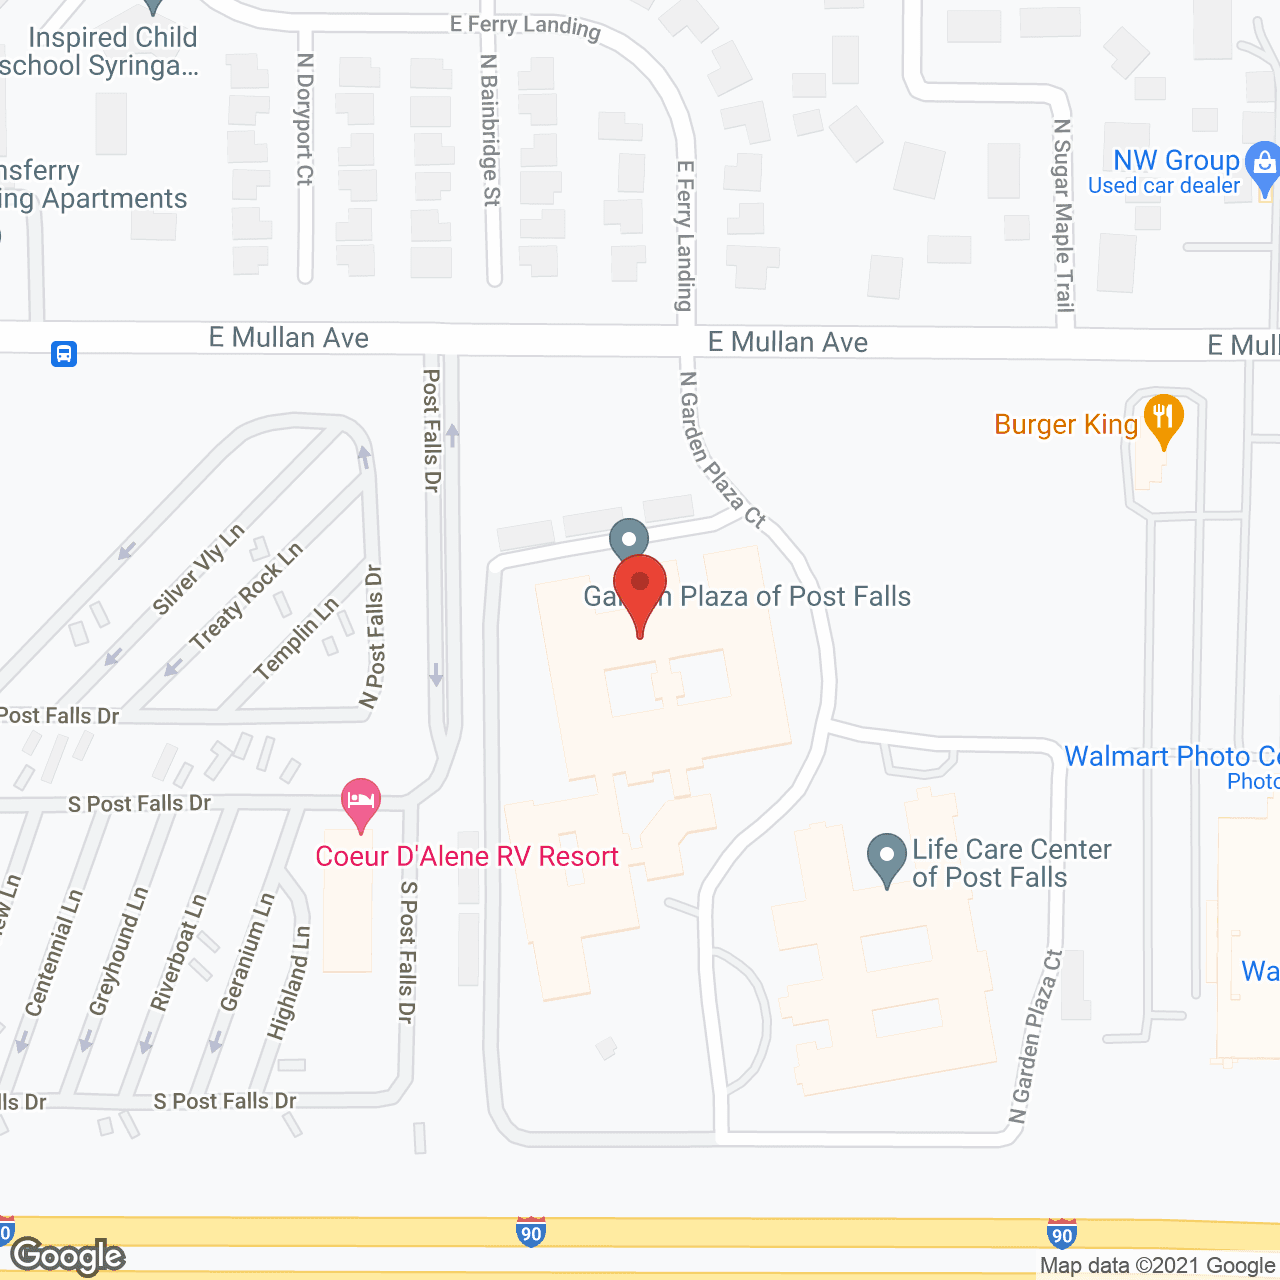 Garden Plaza of Post Falls in google map